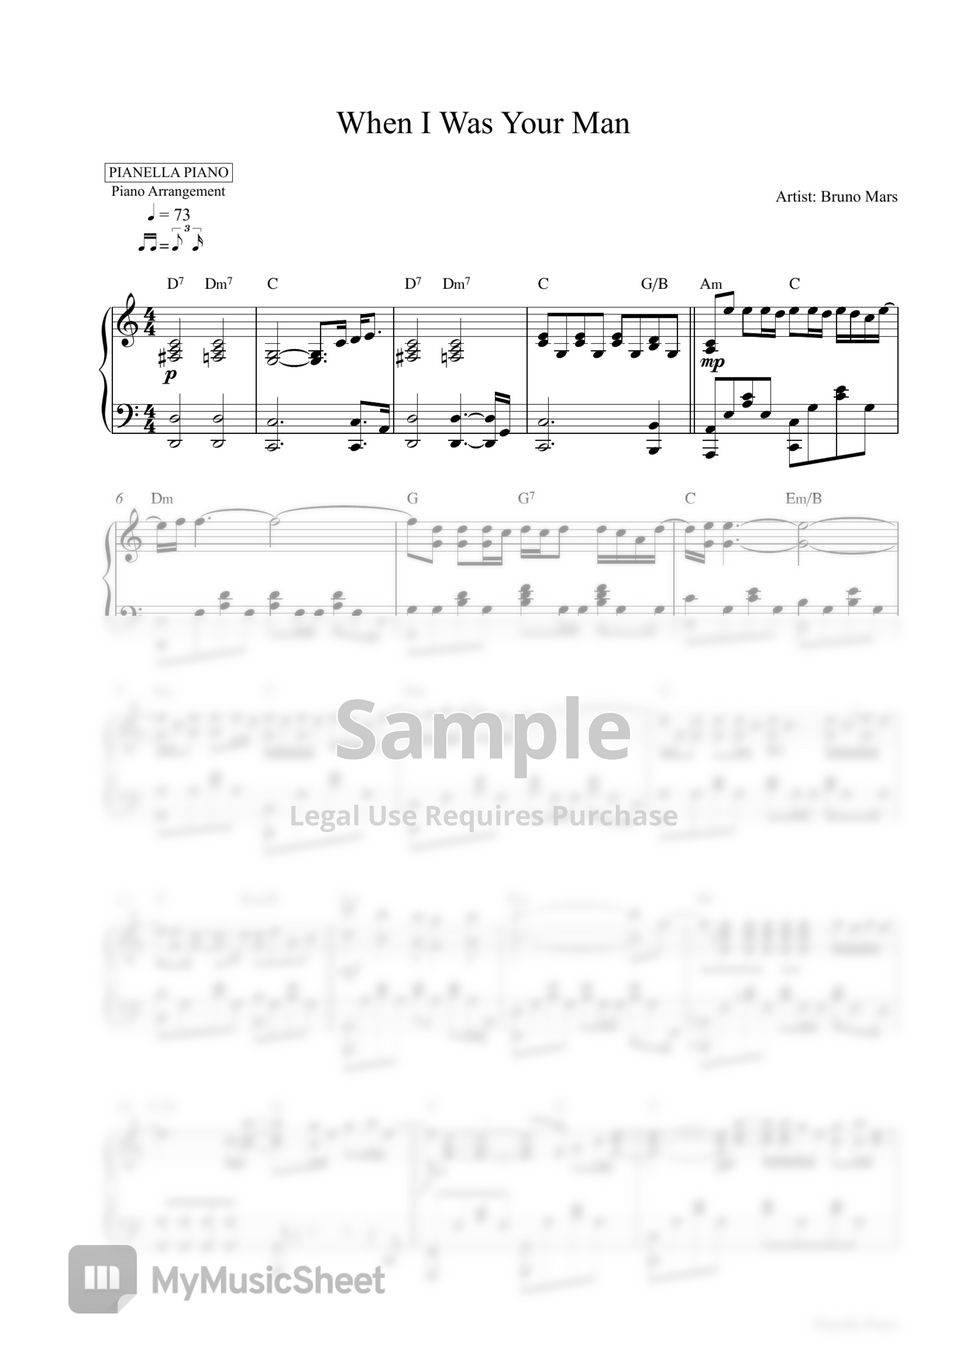 Bruno Mars - When I Was Your Man (Piano Sheet) by Pianella Piano